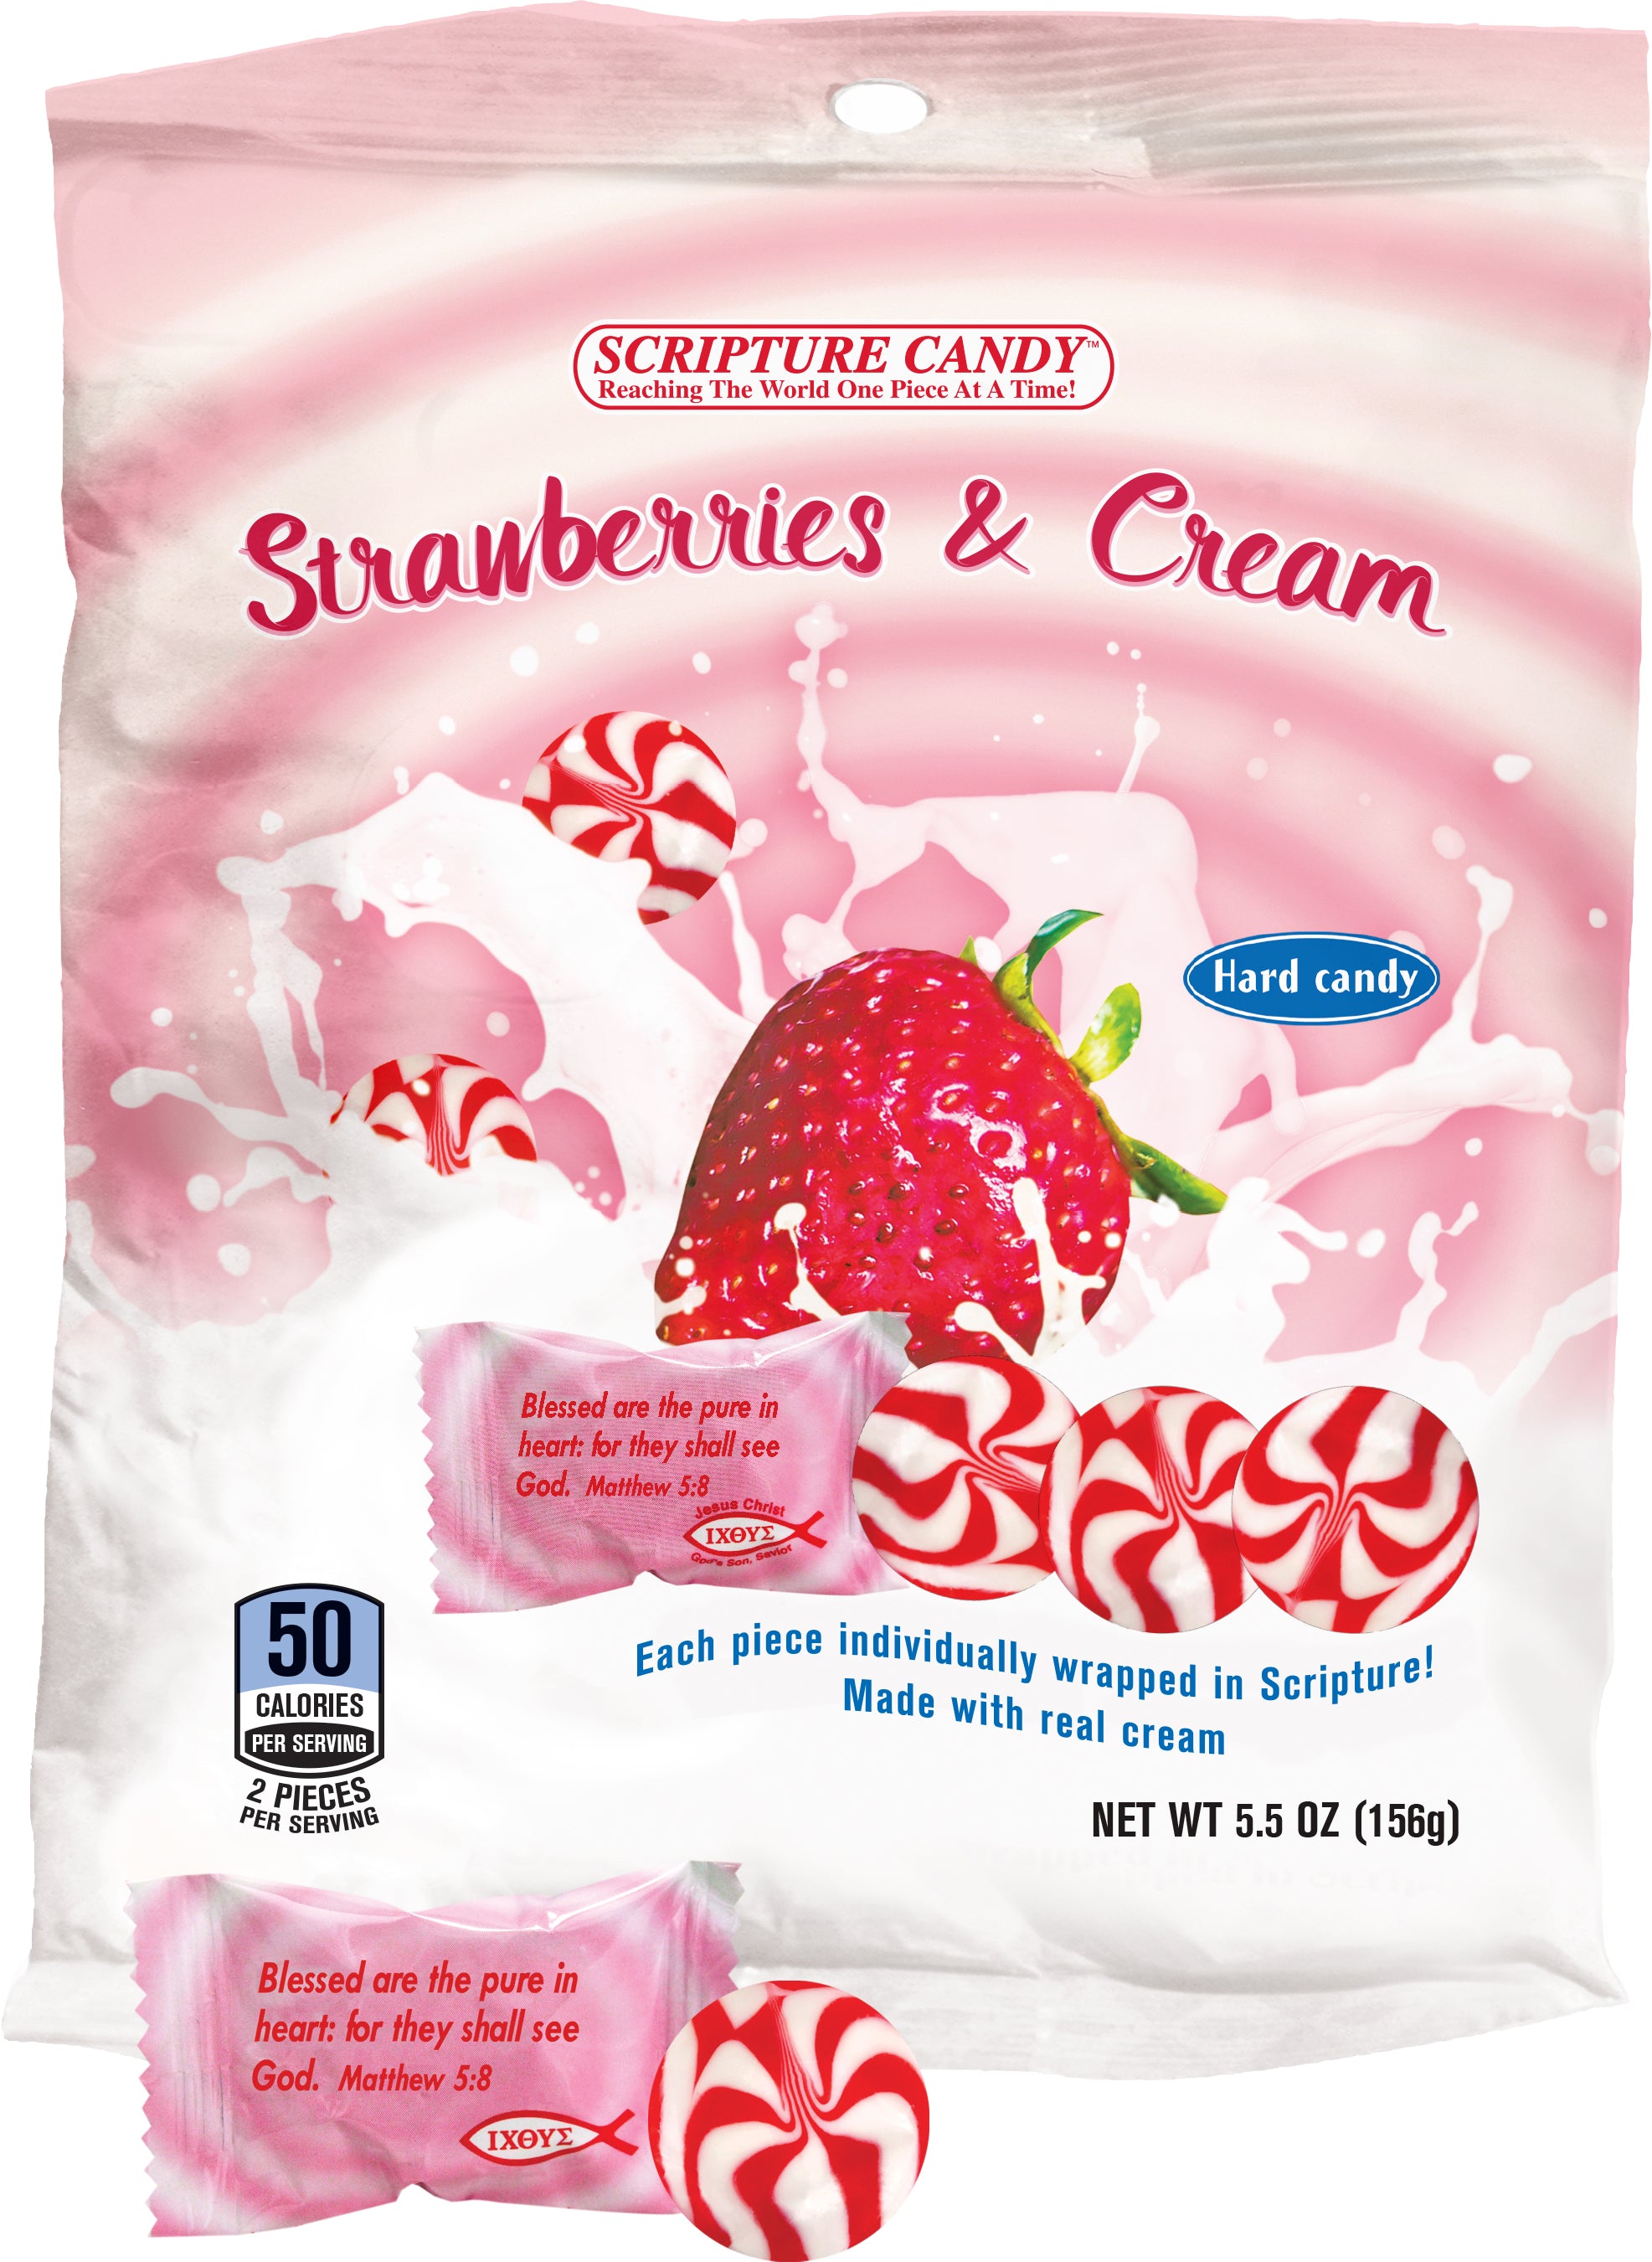 Creamy's Original-Choco Mint Cream Hard Candy